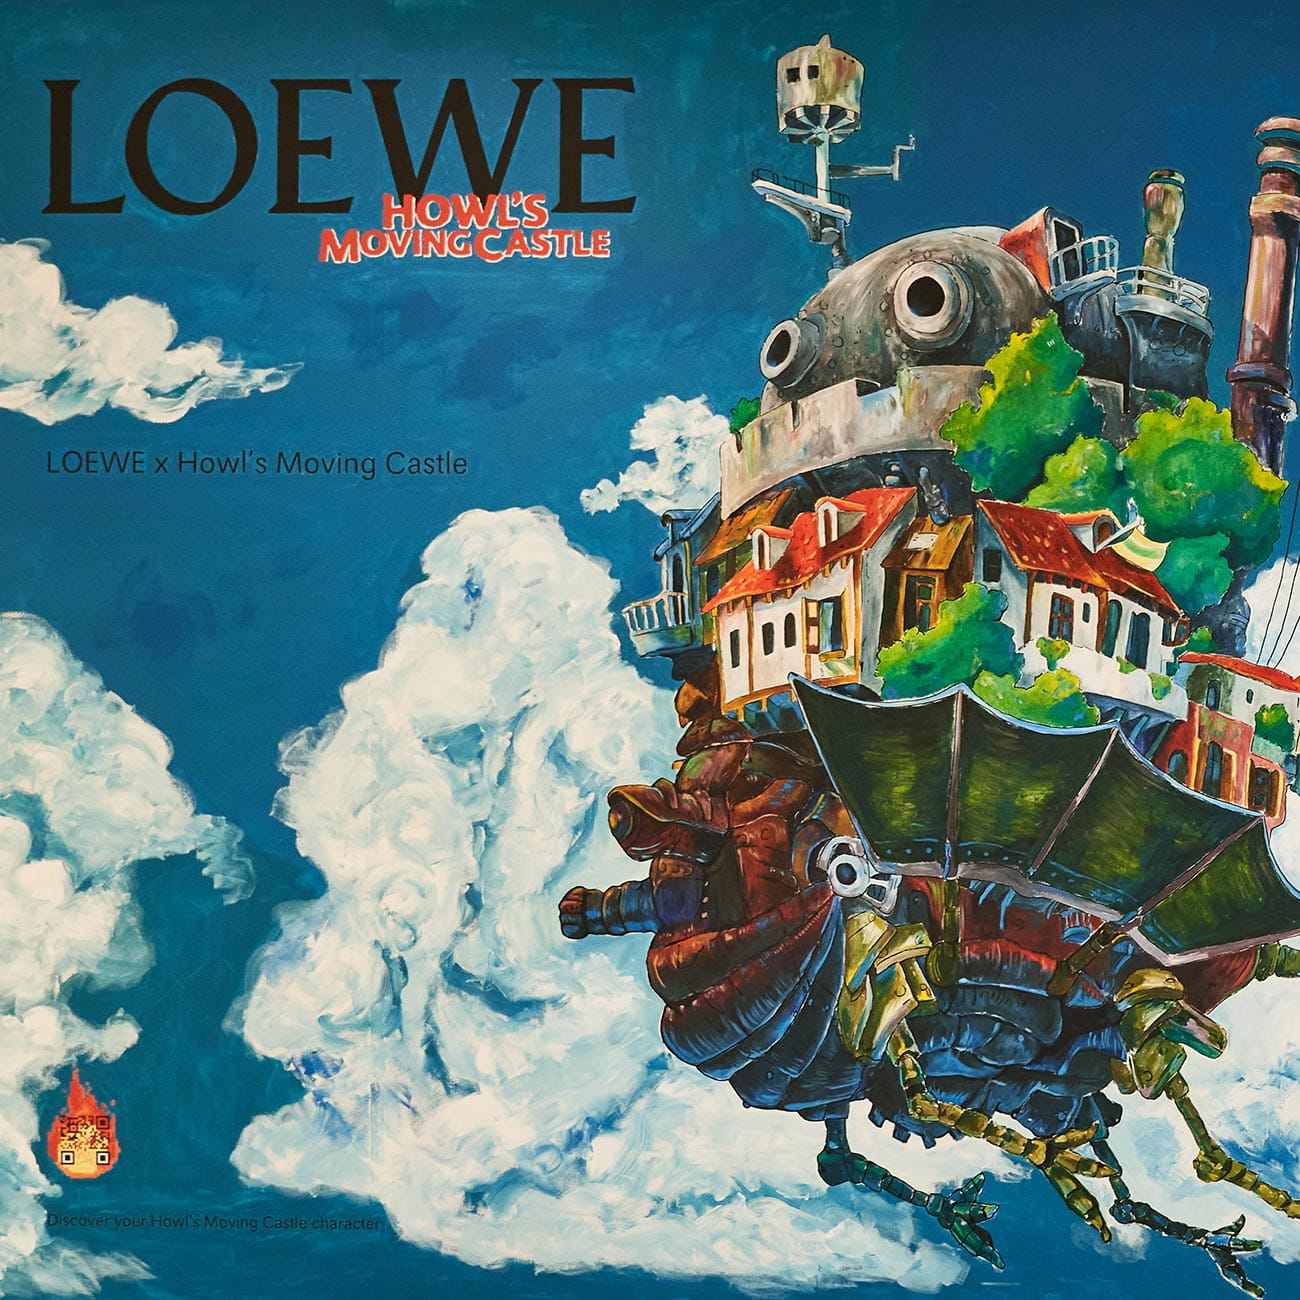 Pei Chung mural for LOEWE and Studio Ghibli collaboration